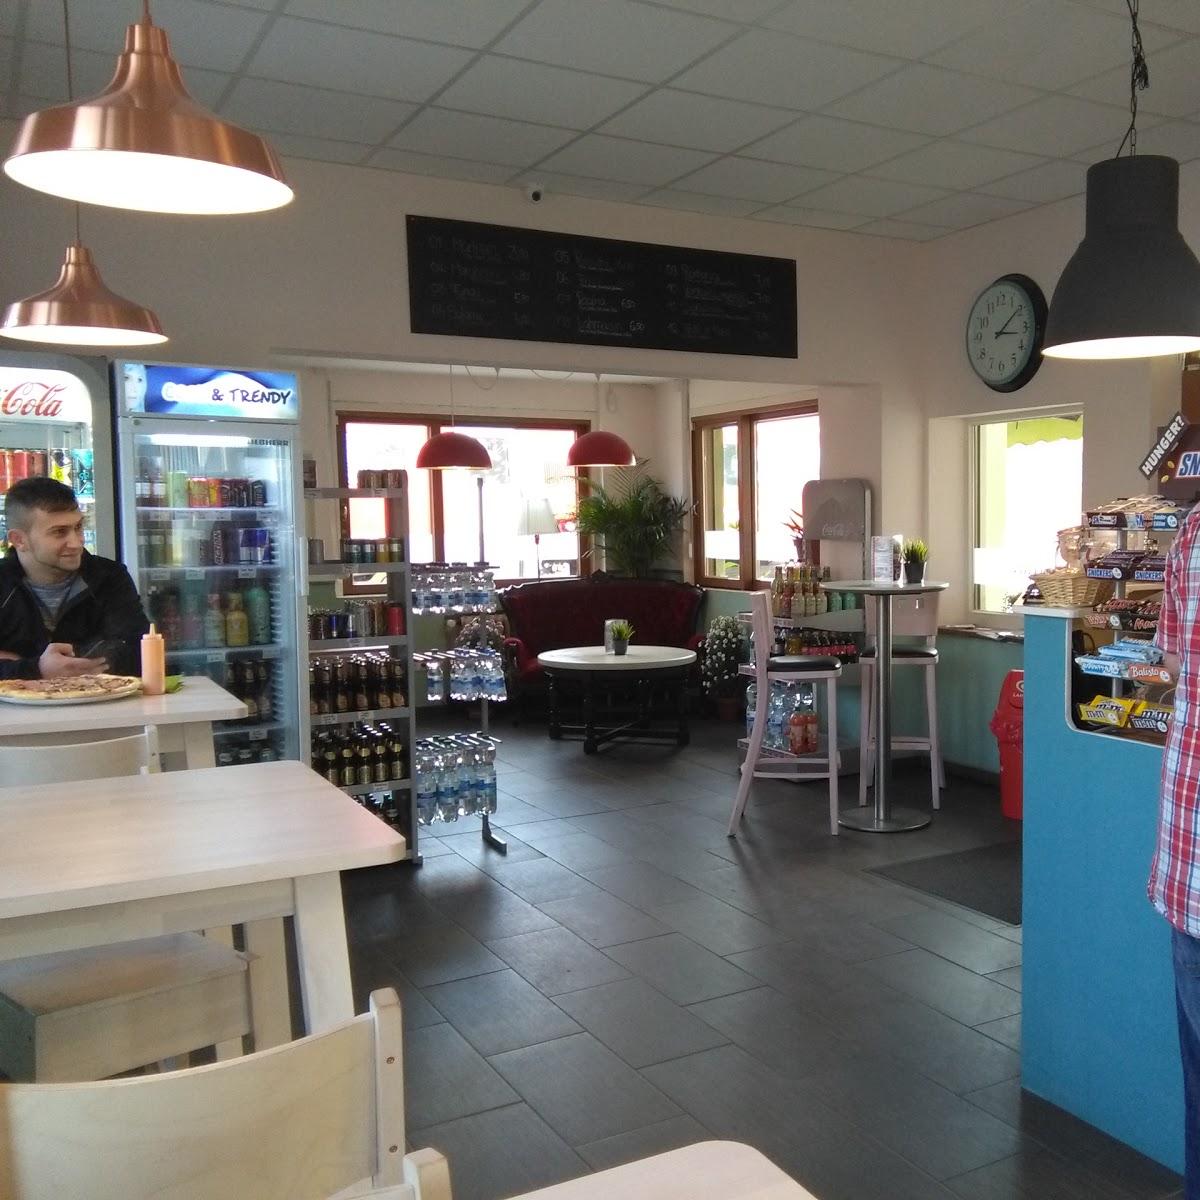 Restaurant "ave maria - pizza, panini, caffè" in Bobingen